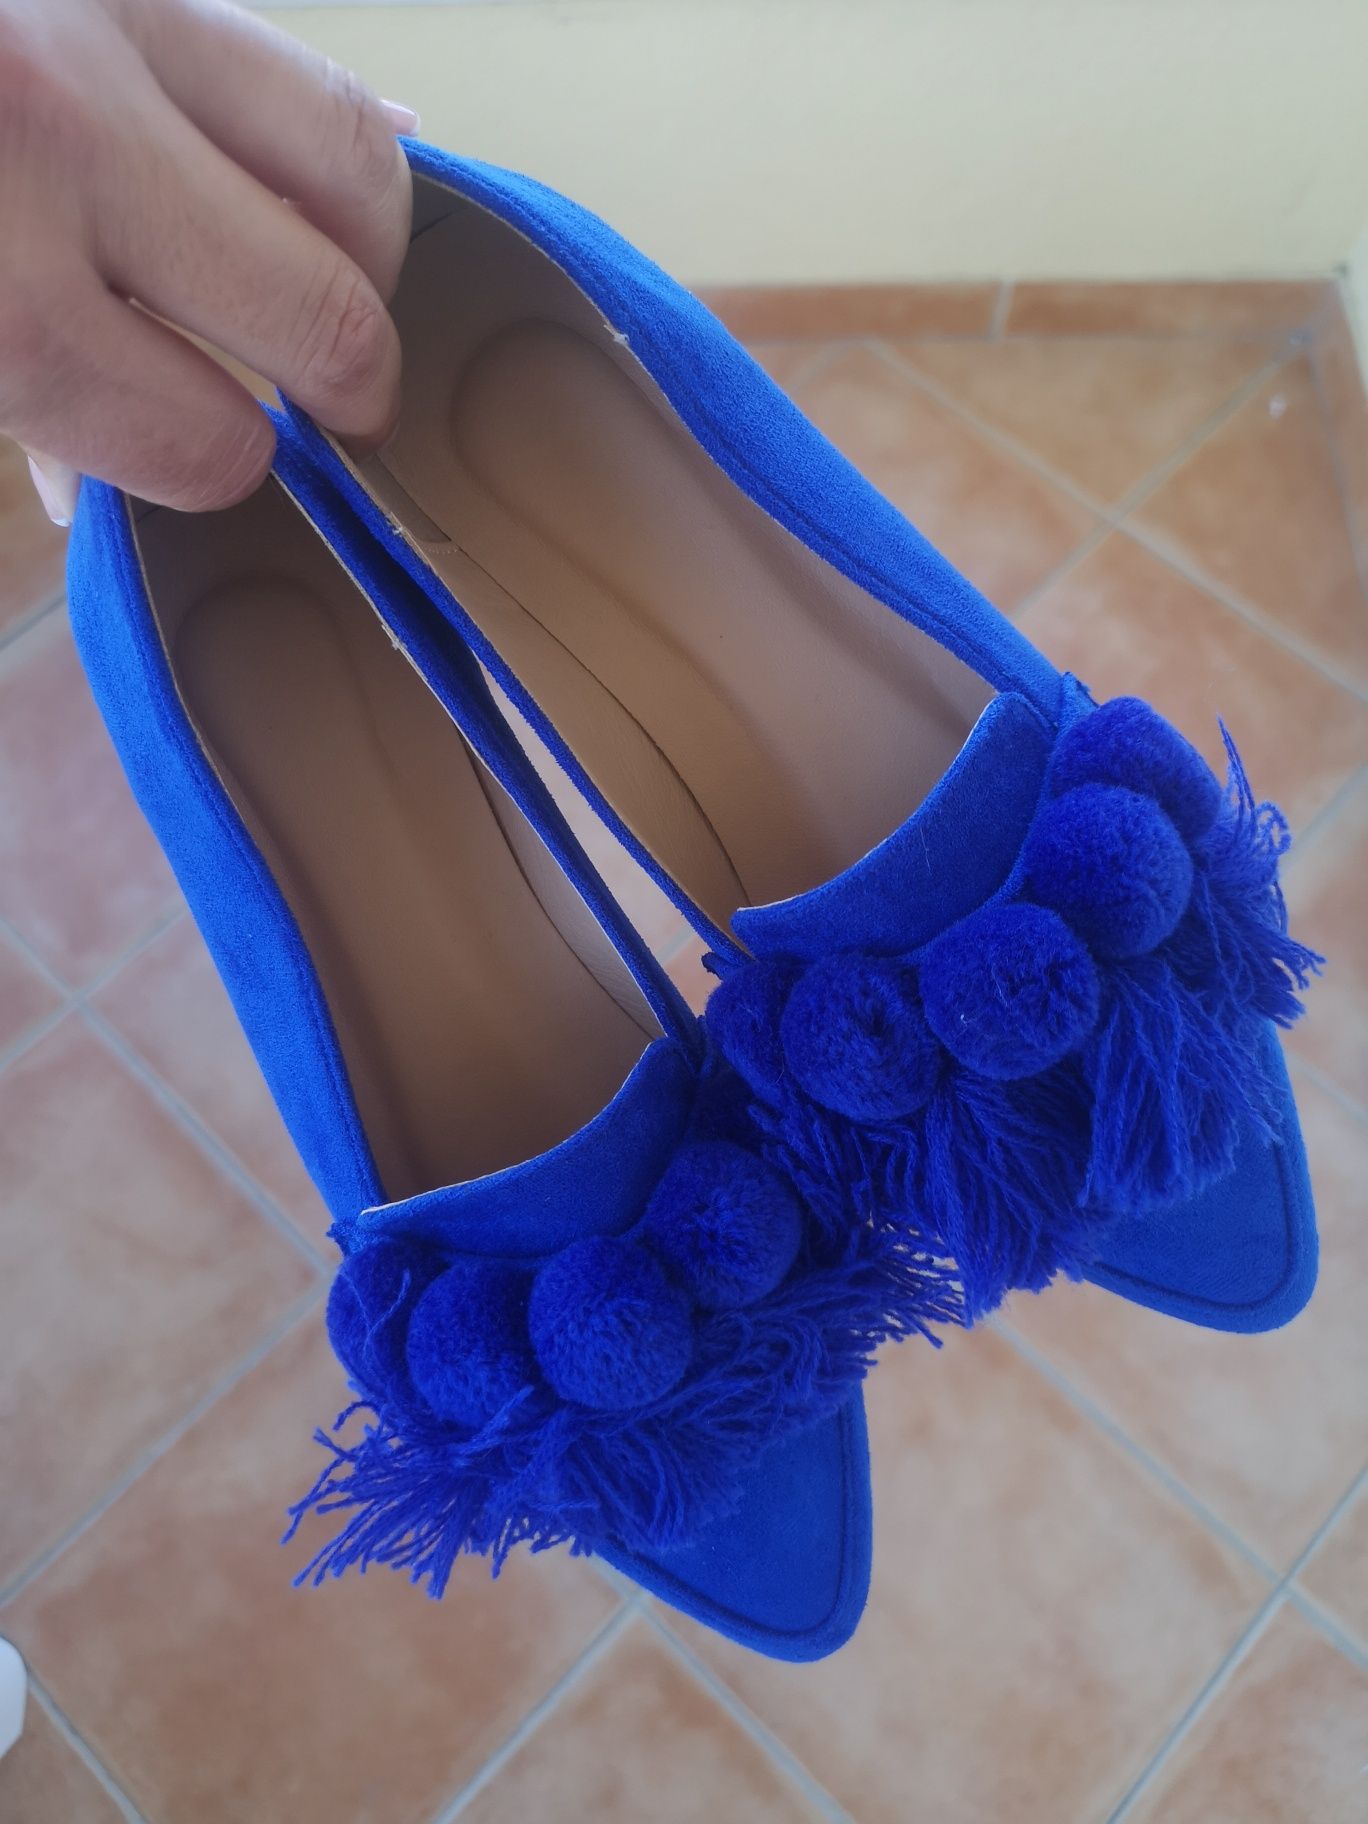 Sapatos azulao novos